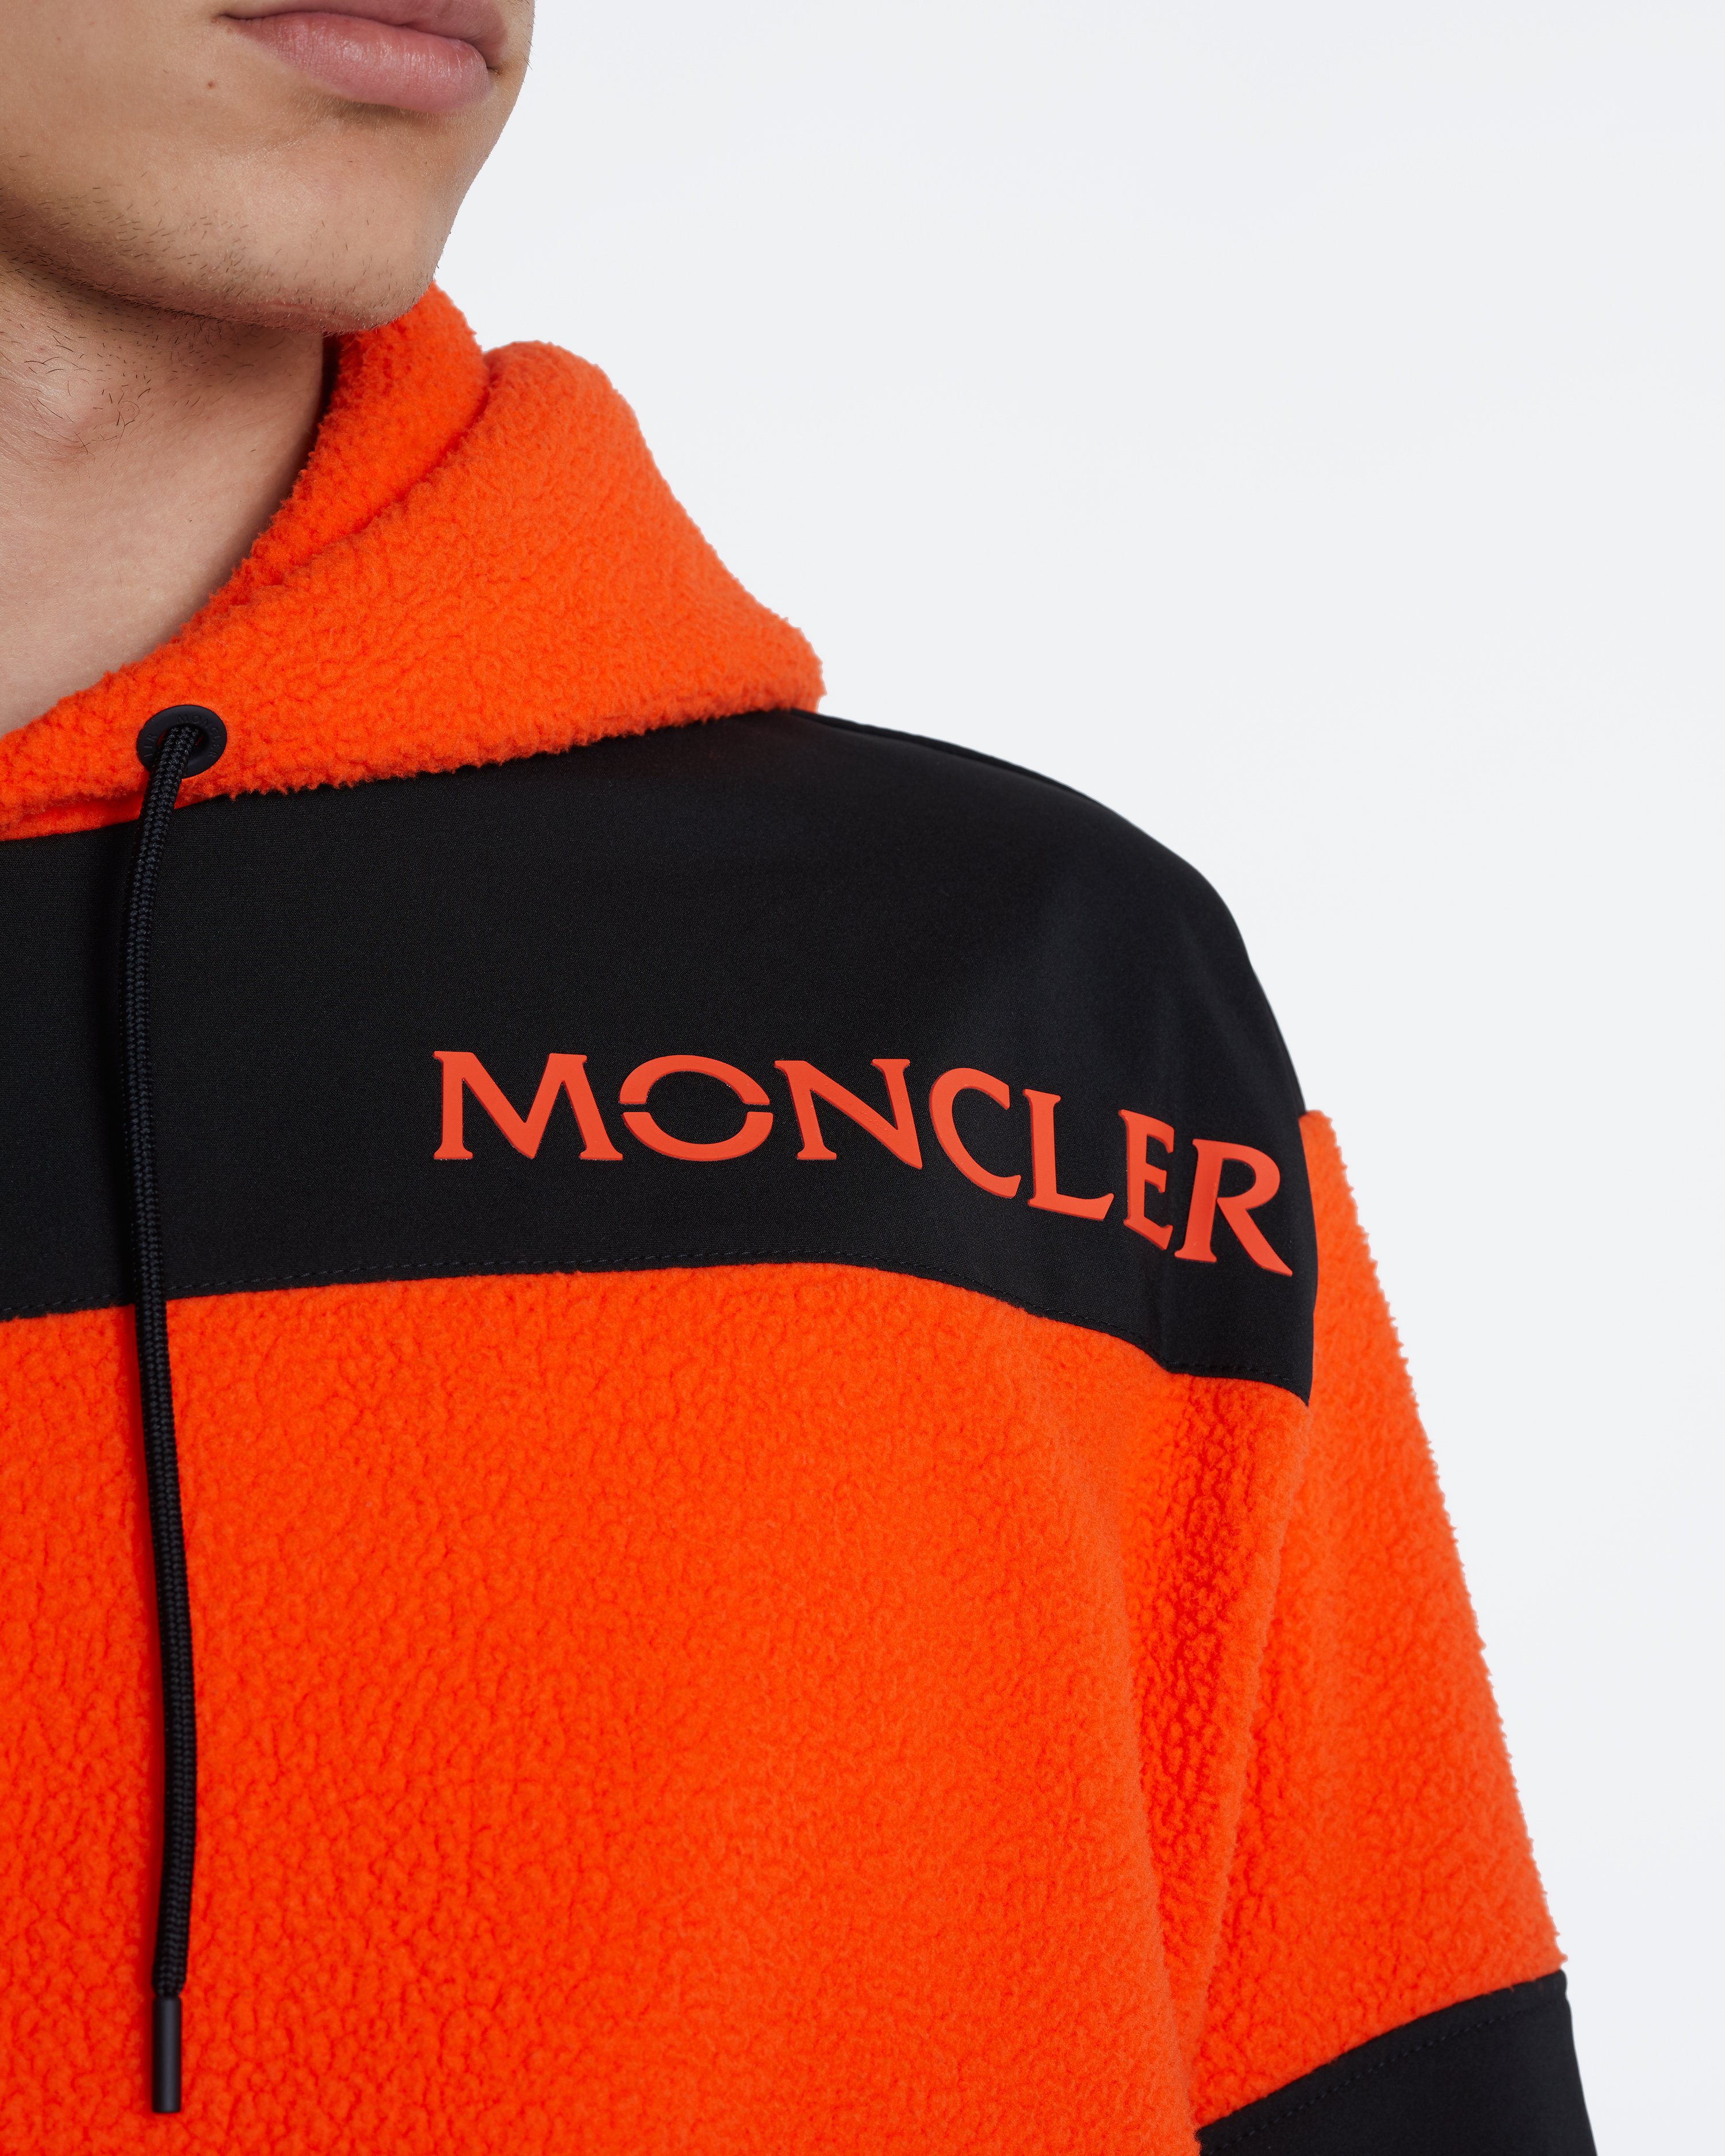 Moncler Genius - Recycled Jumper - Clothing - Orange - Image 5